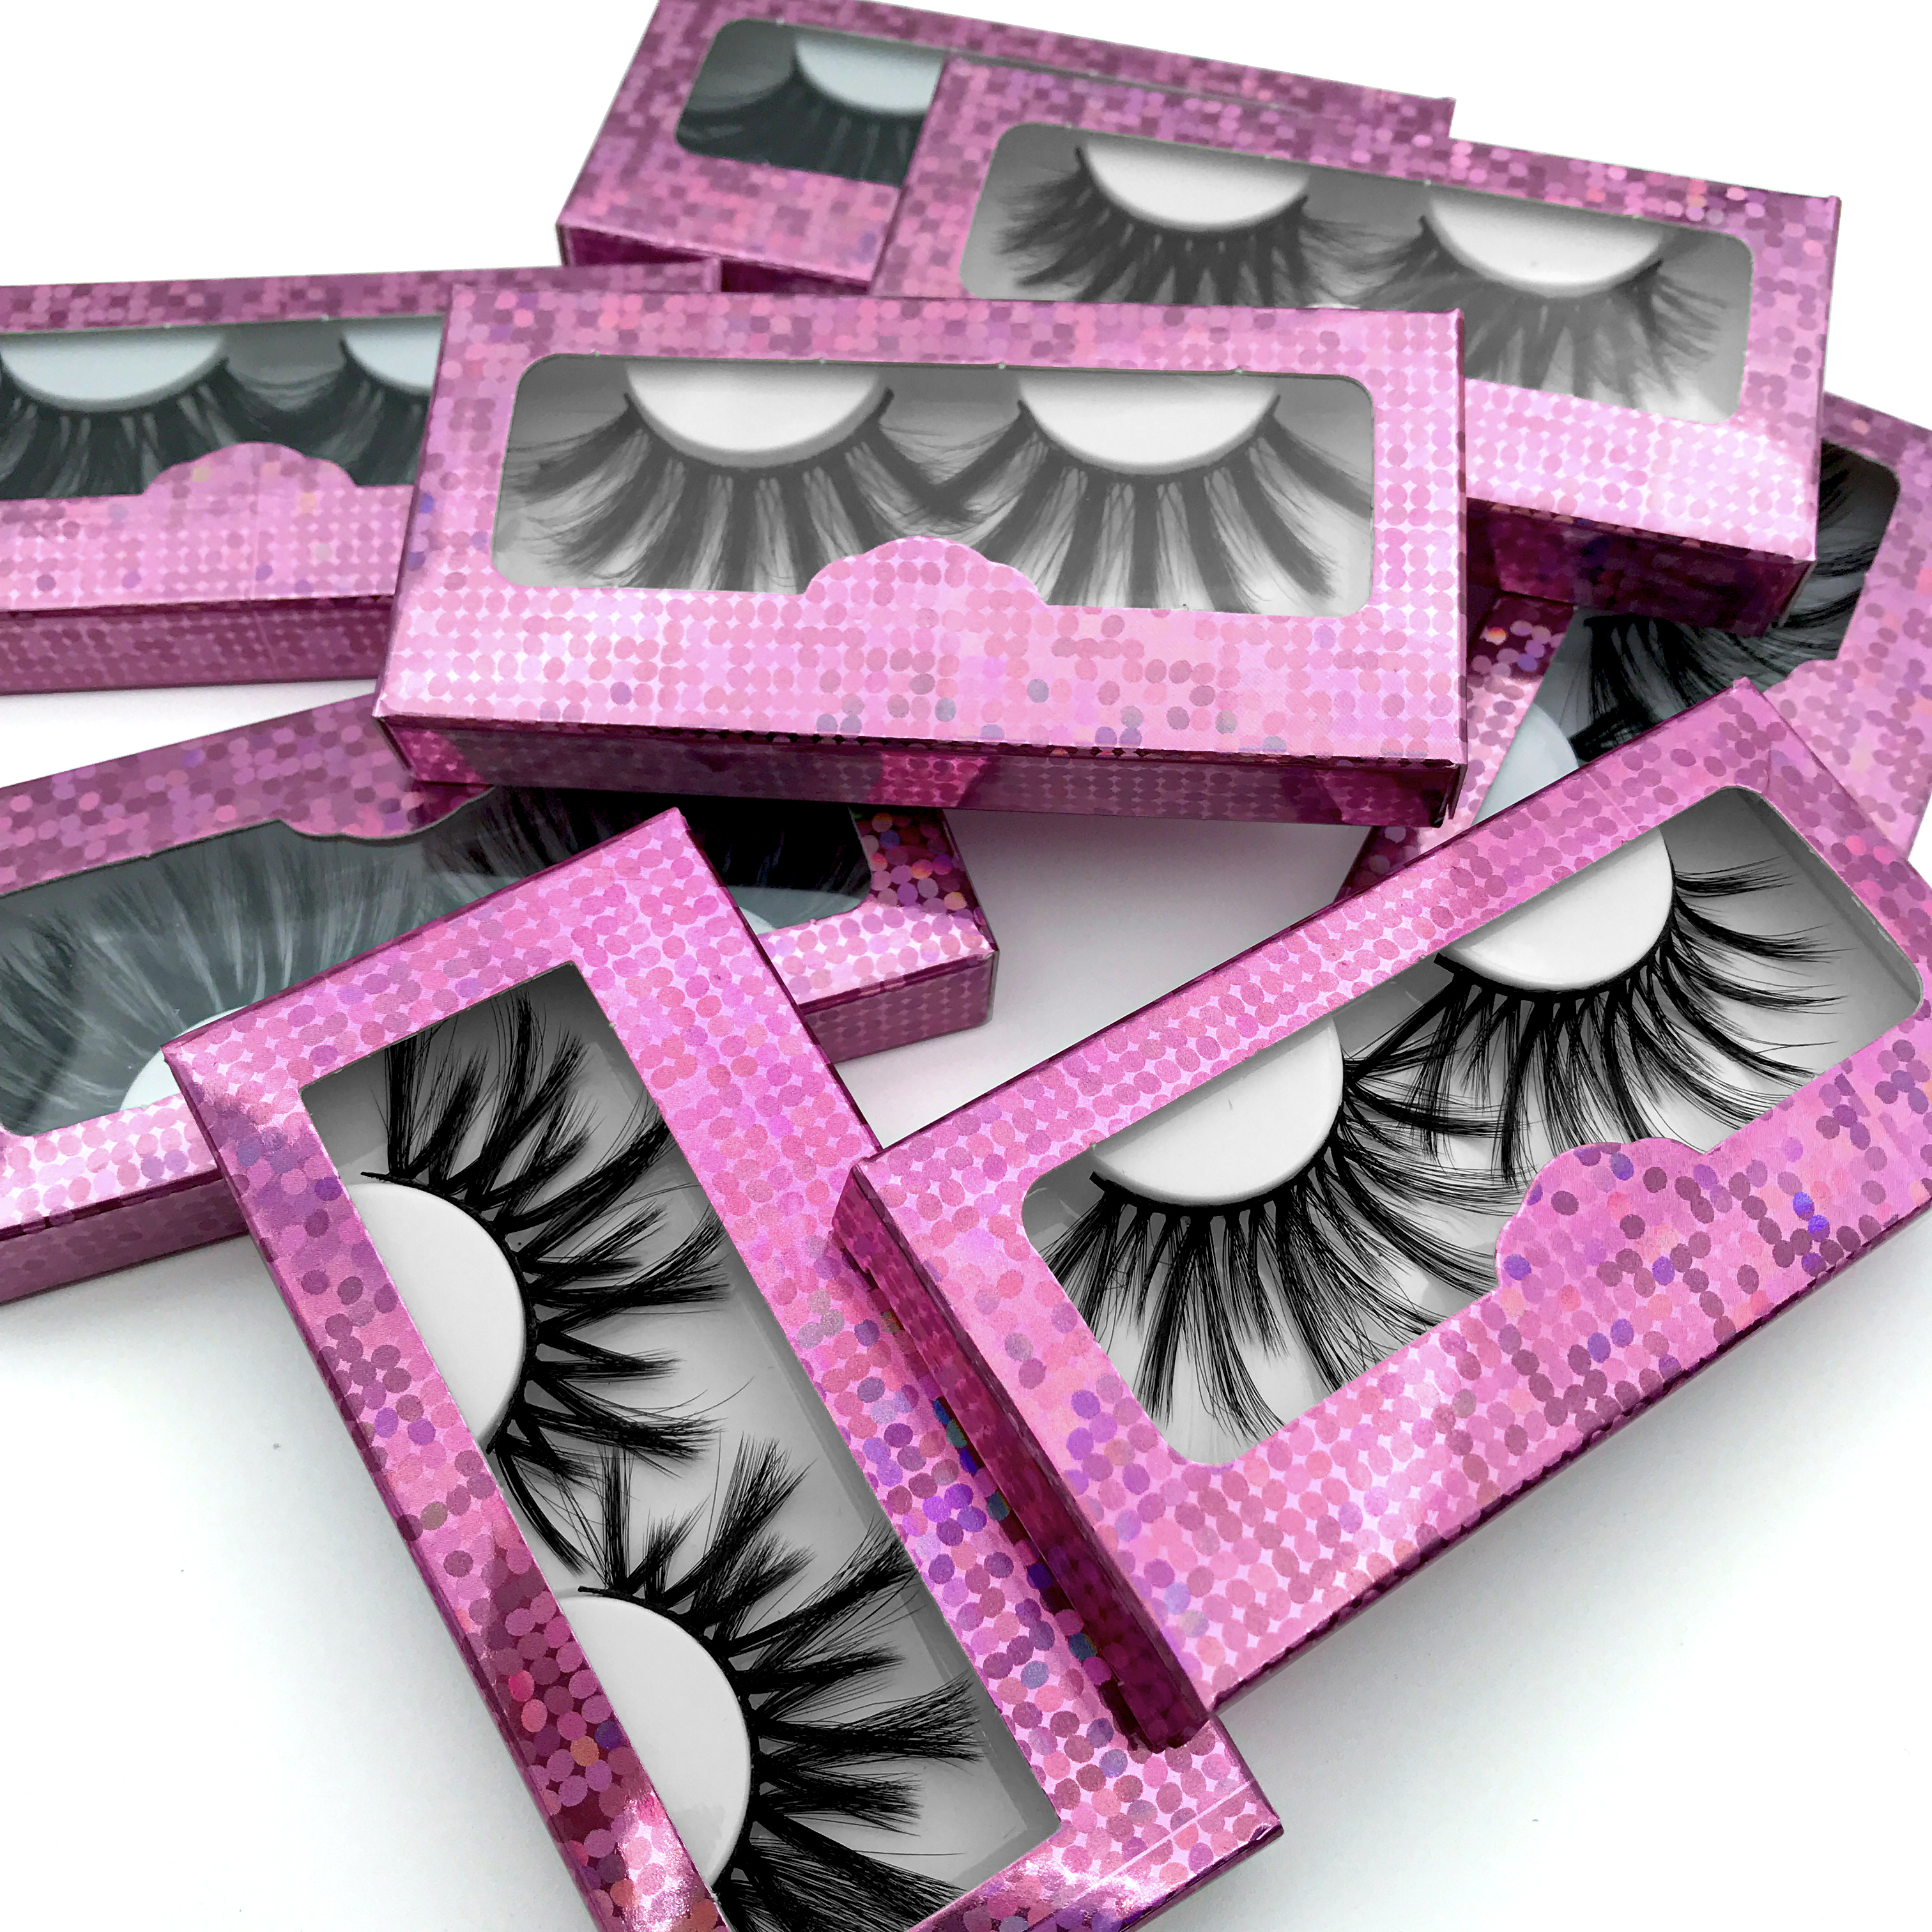 

Eyelashes 25mm Wispy Dramatic Long Lashes Fluffy Faux Mink Eyelash Extension Thick Lashes Pack For Make Up